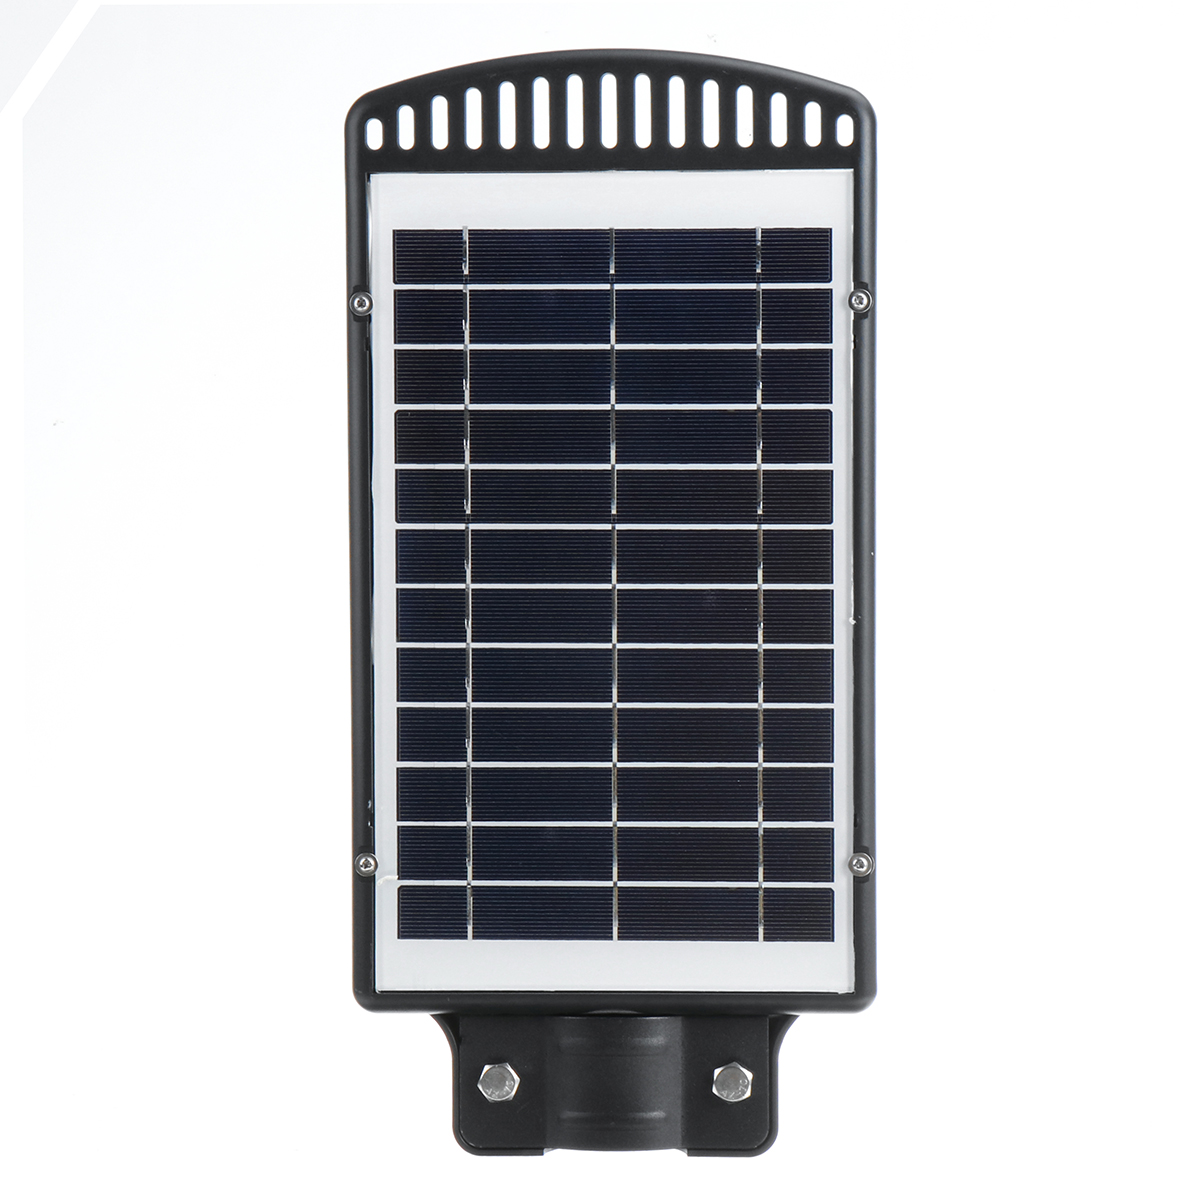 Solar-Panel-192384576LED-Wall-Street-Light-Outdoor-Garden-Lamp-wirh-Remote-Controller-1596569-9